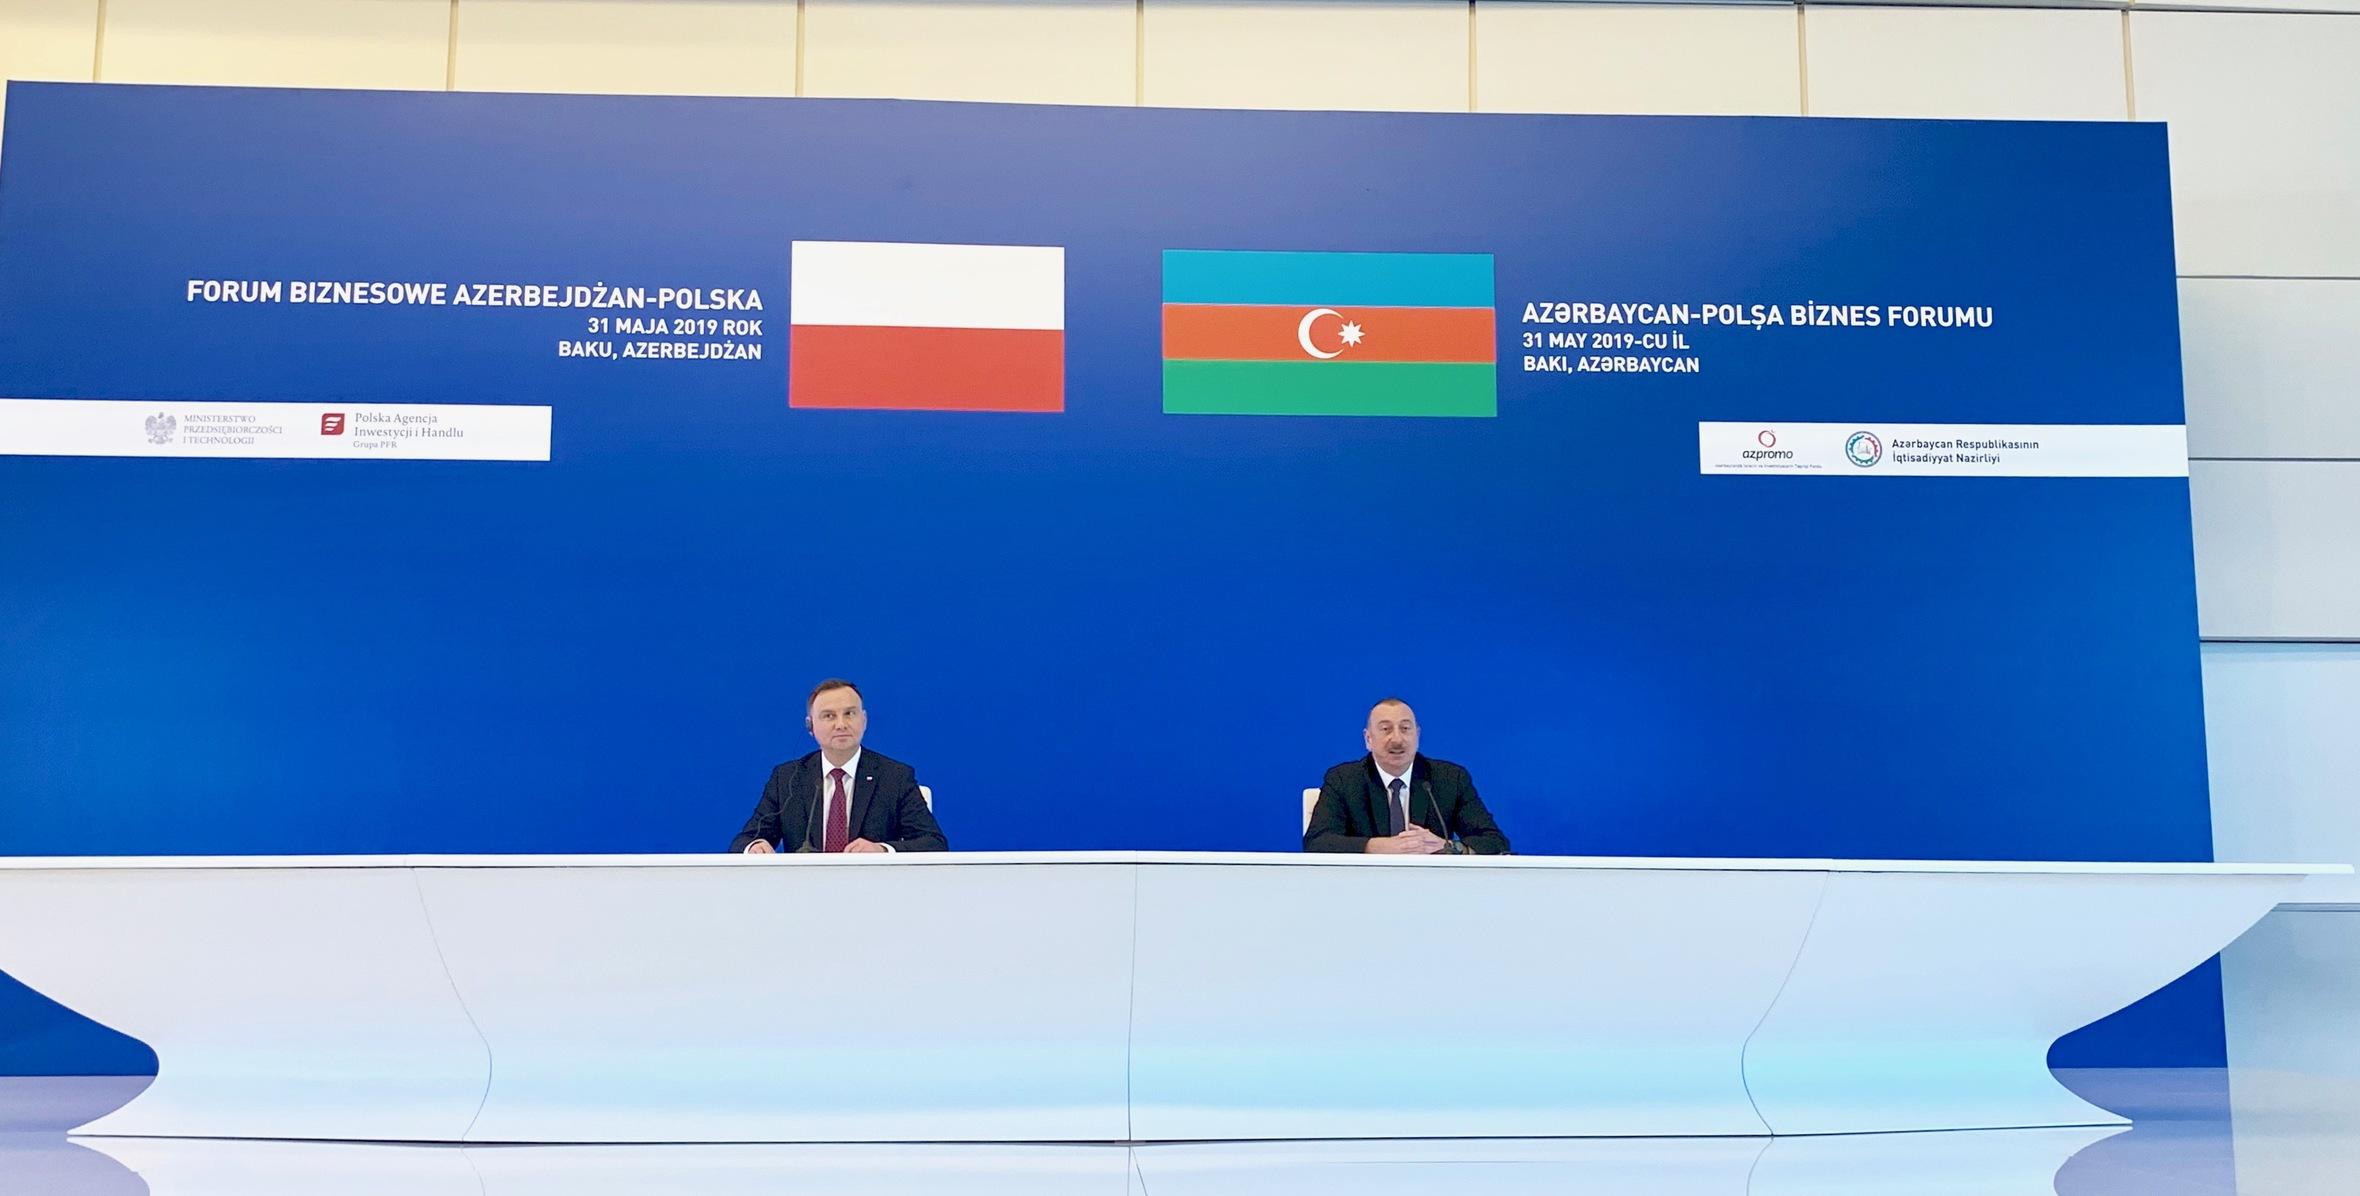 Speech by Ilham Aliyev at the Azerbaijan-Poland business forum